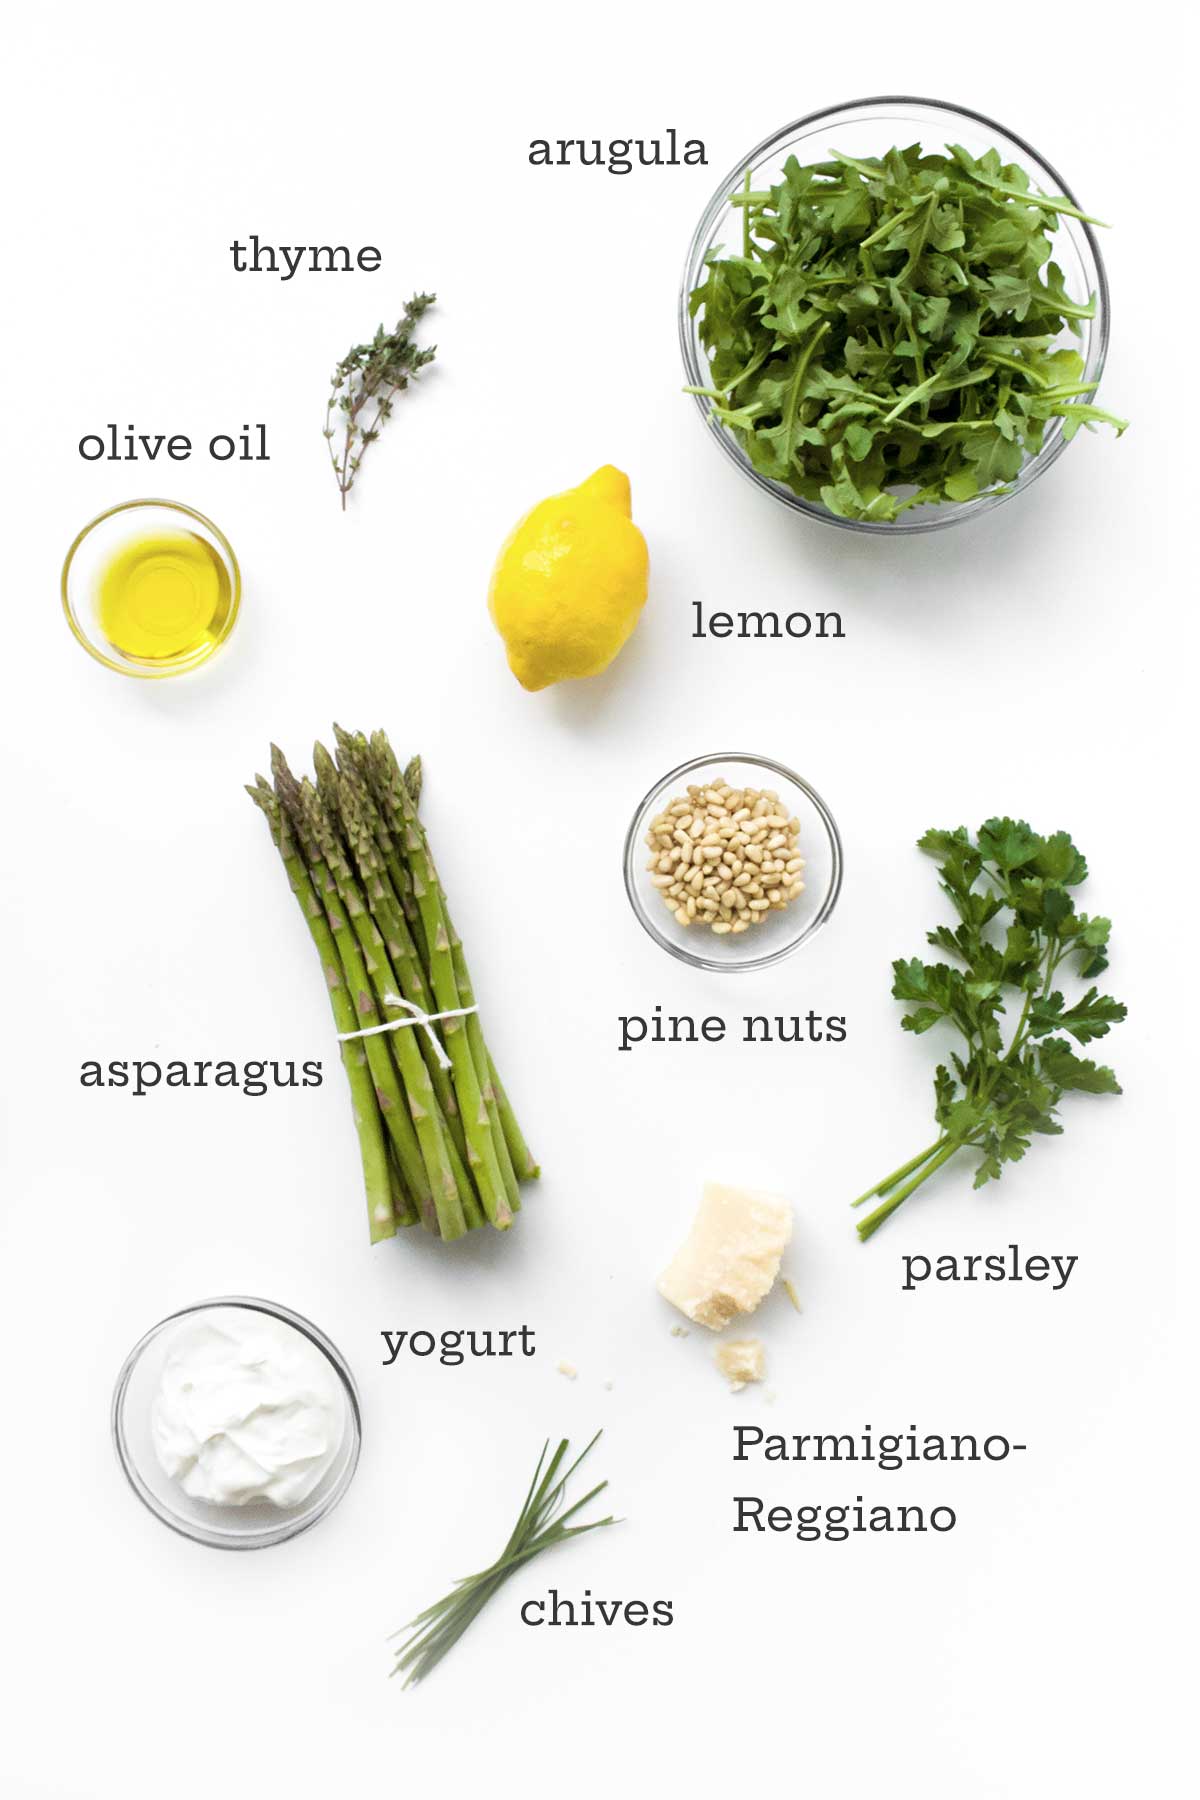 Ingredients for a raw asparagus salad: asparagus, olive oil, thyme, arugula, lemon, parsley, pine nuts, Parmesan cheese, yogurt, chives.